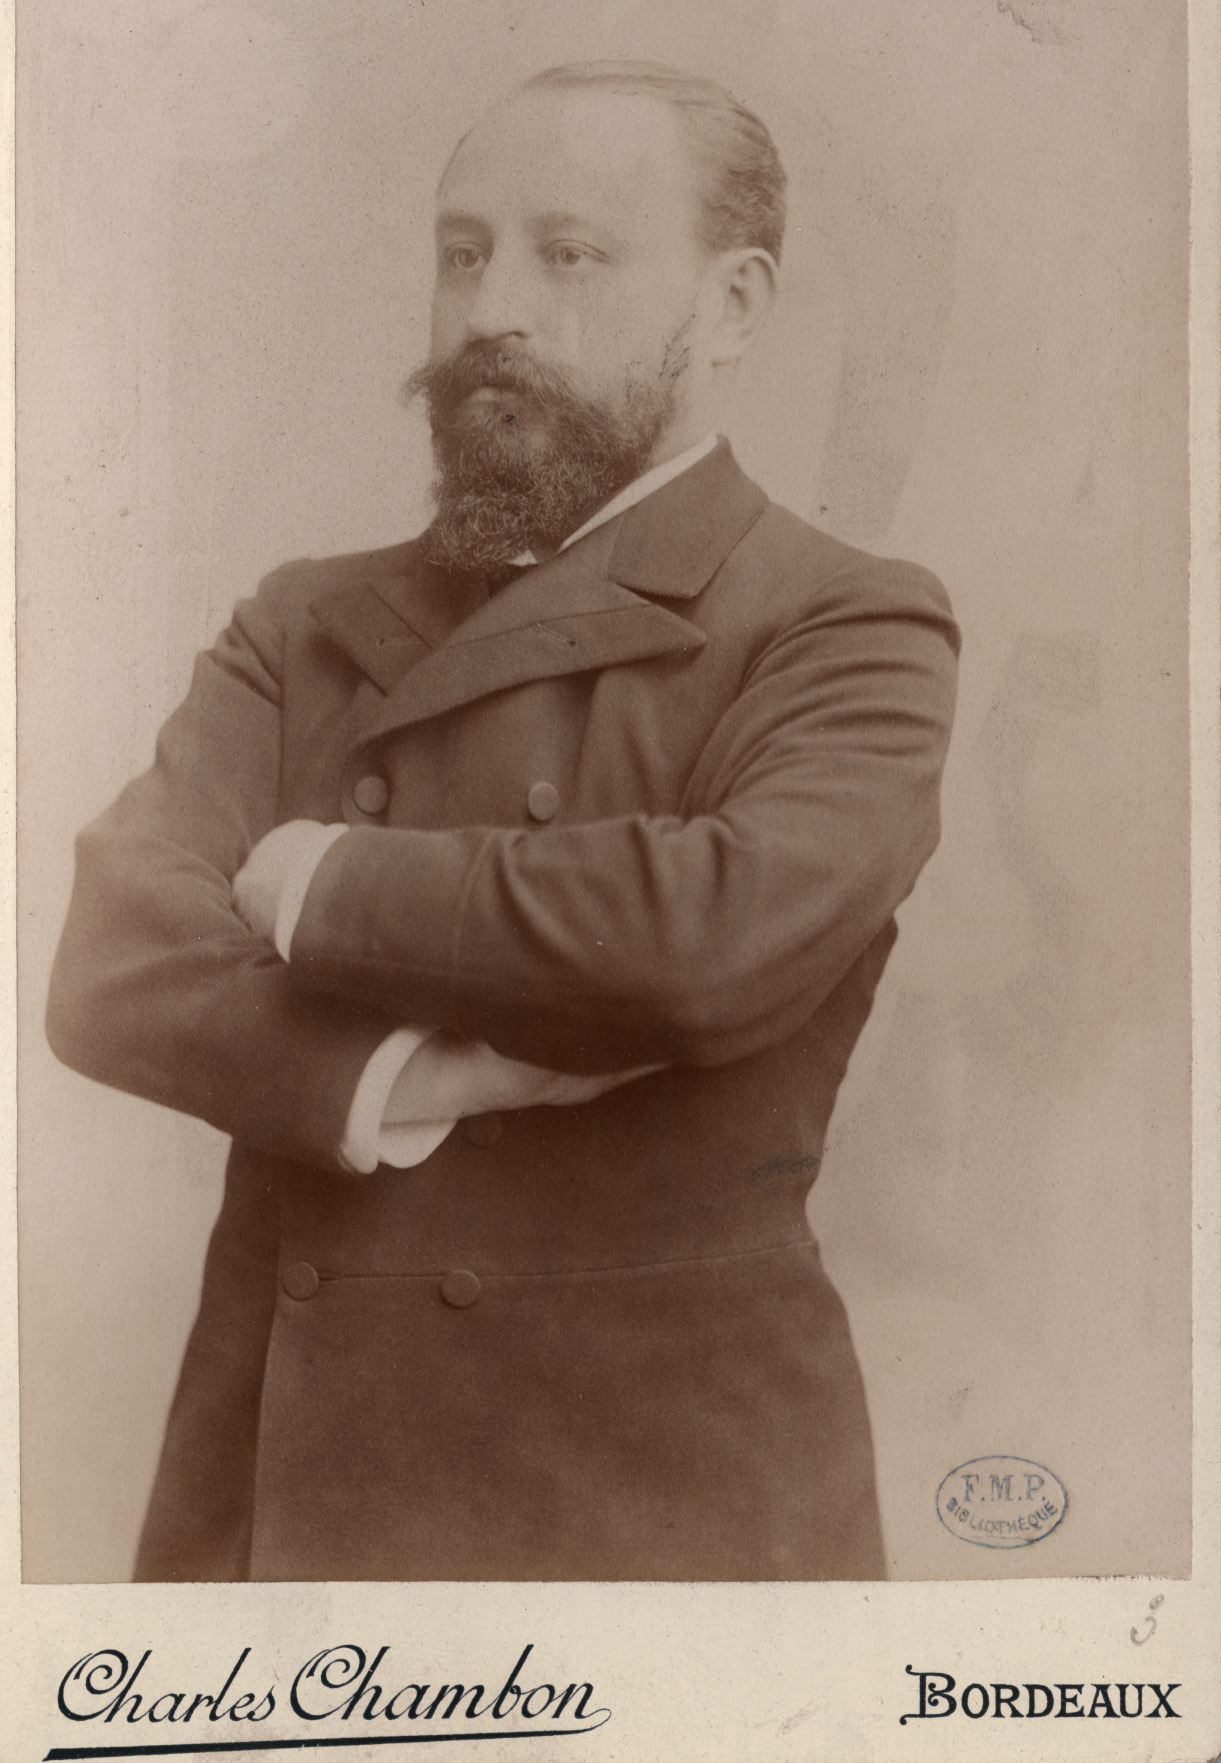 File:Bergonie, Jean Alban (1857-1925) CIPH0003.jpg - Wikimedia Commons